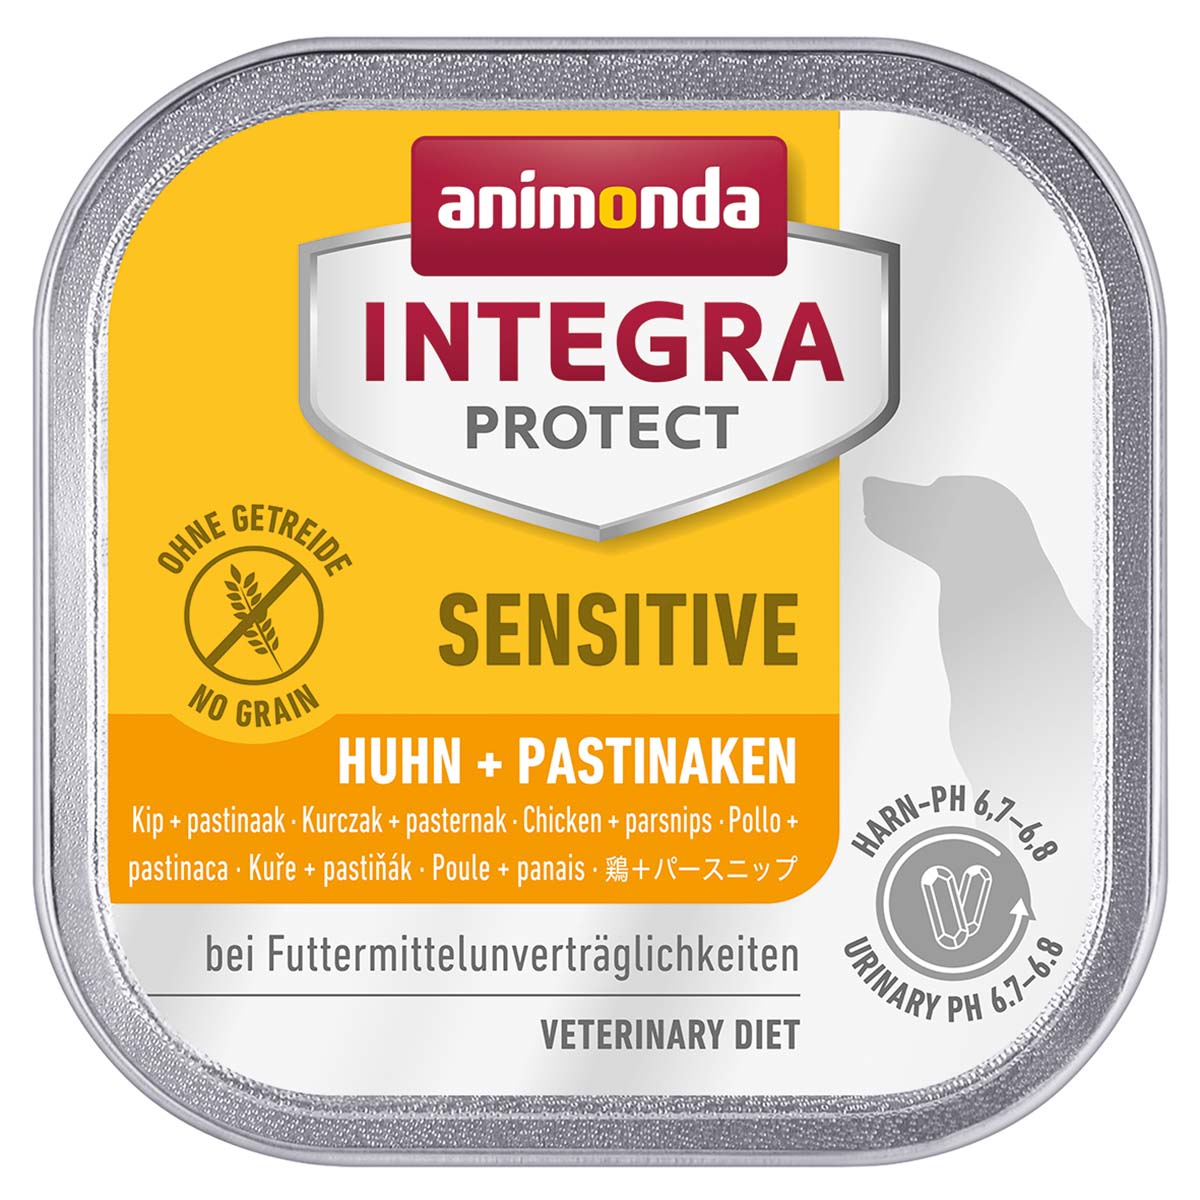 animonda Integra Protect Sensitive Huhn und Pastinaken 22x150g von animonda Integra Protect